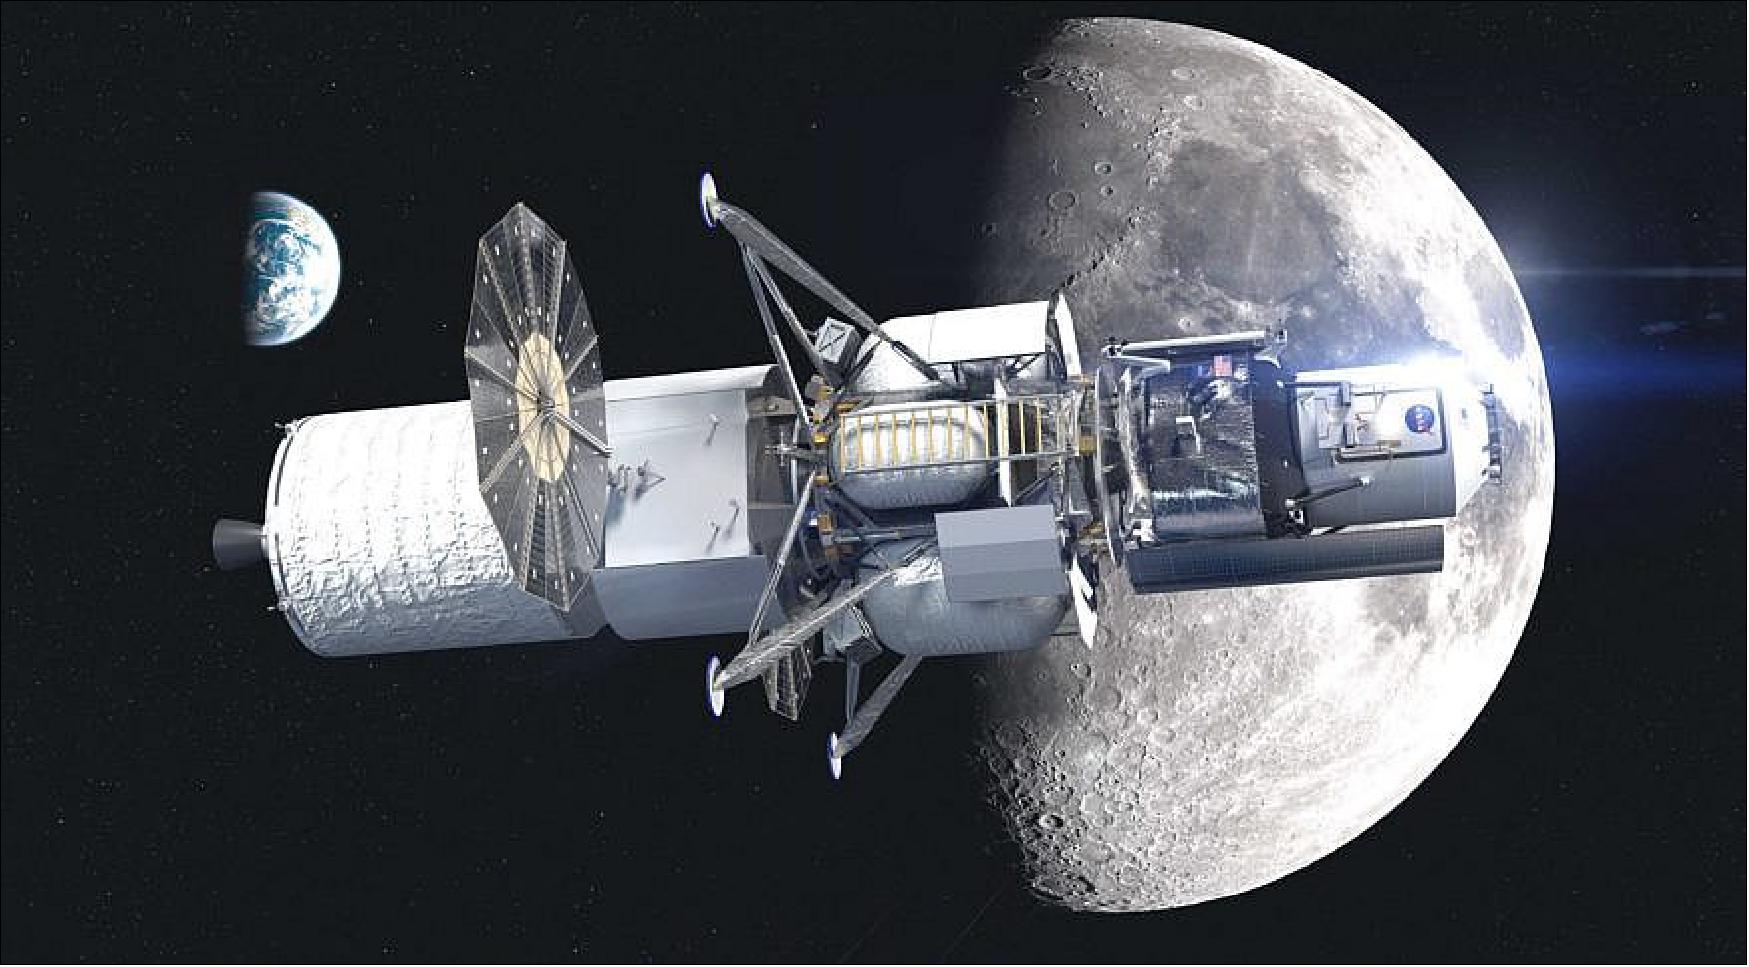 Figure 16: The Blue Origin national team integrated lander vehicle (image credit: Blue Origin)